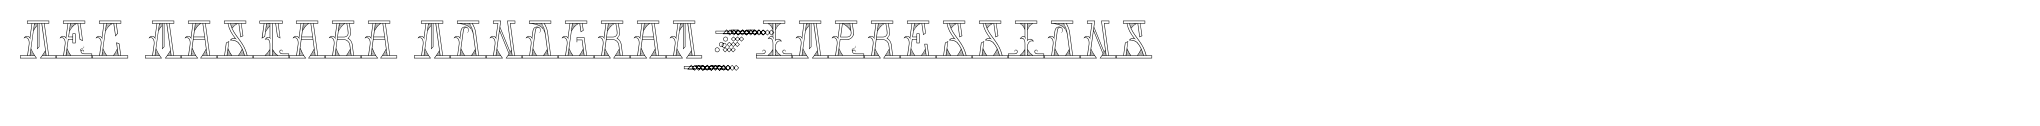 MFC Mastaba Monogram 25000 Impressions image